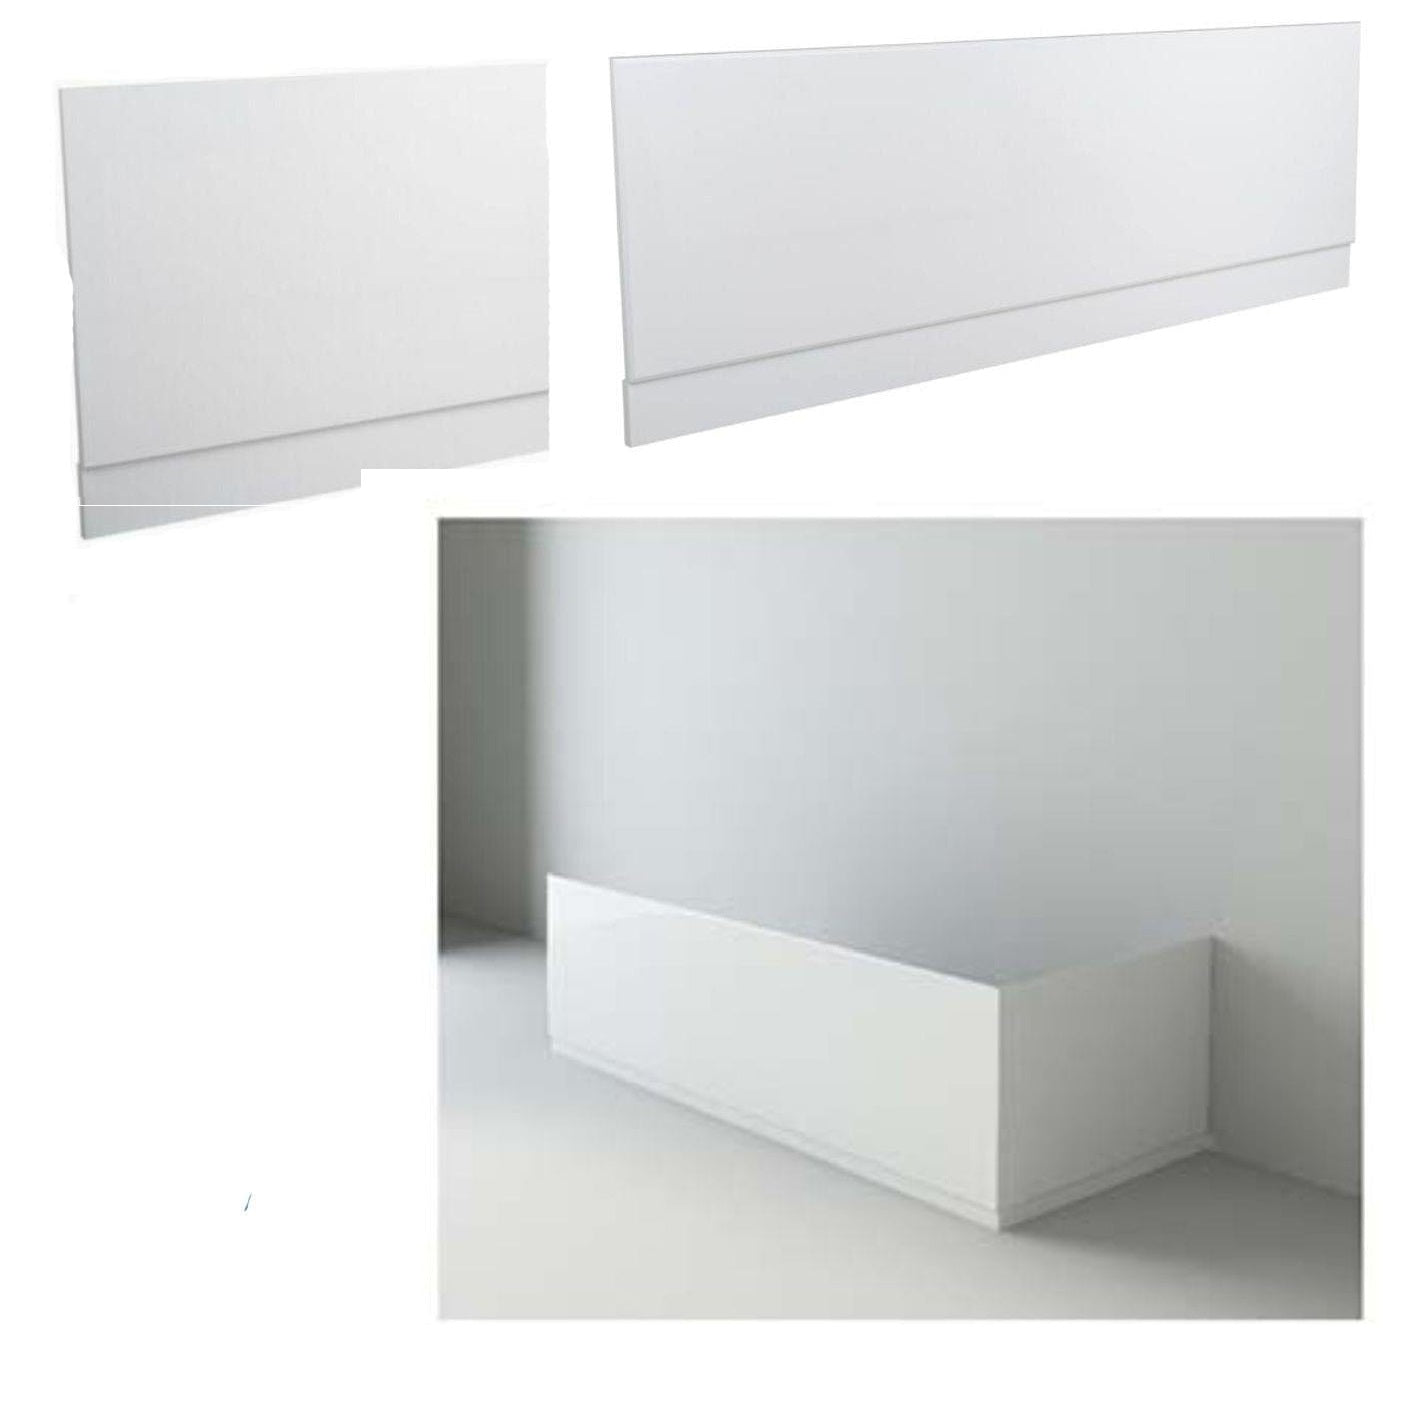 Bathroom Bath Panel MDF Wooden Front Side End Panel Adjustable Plinth Easy Cut White